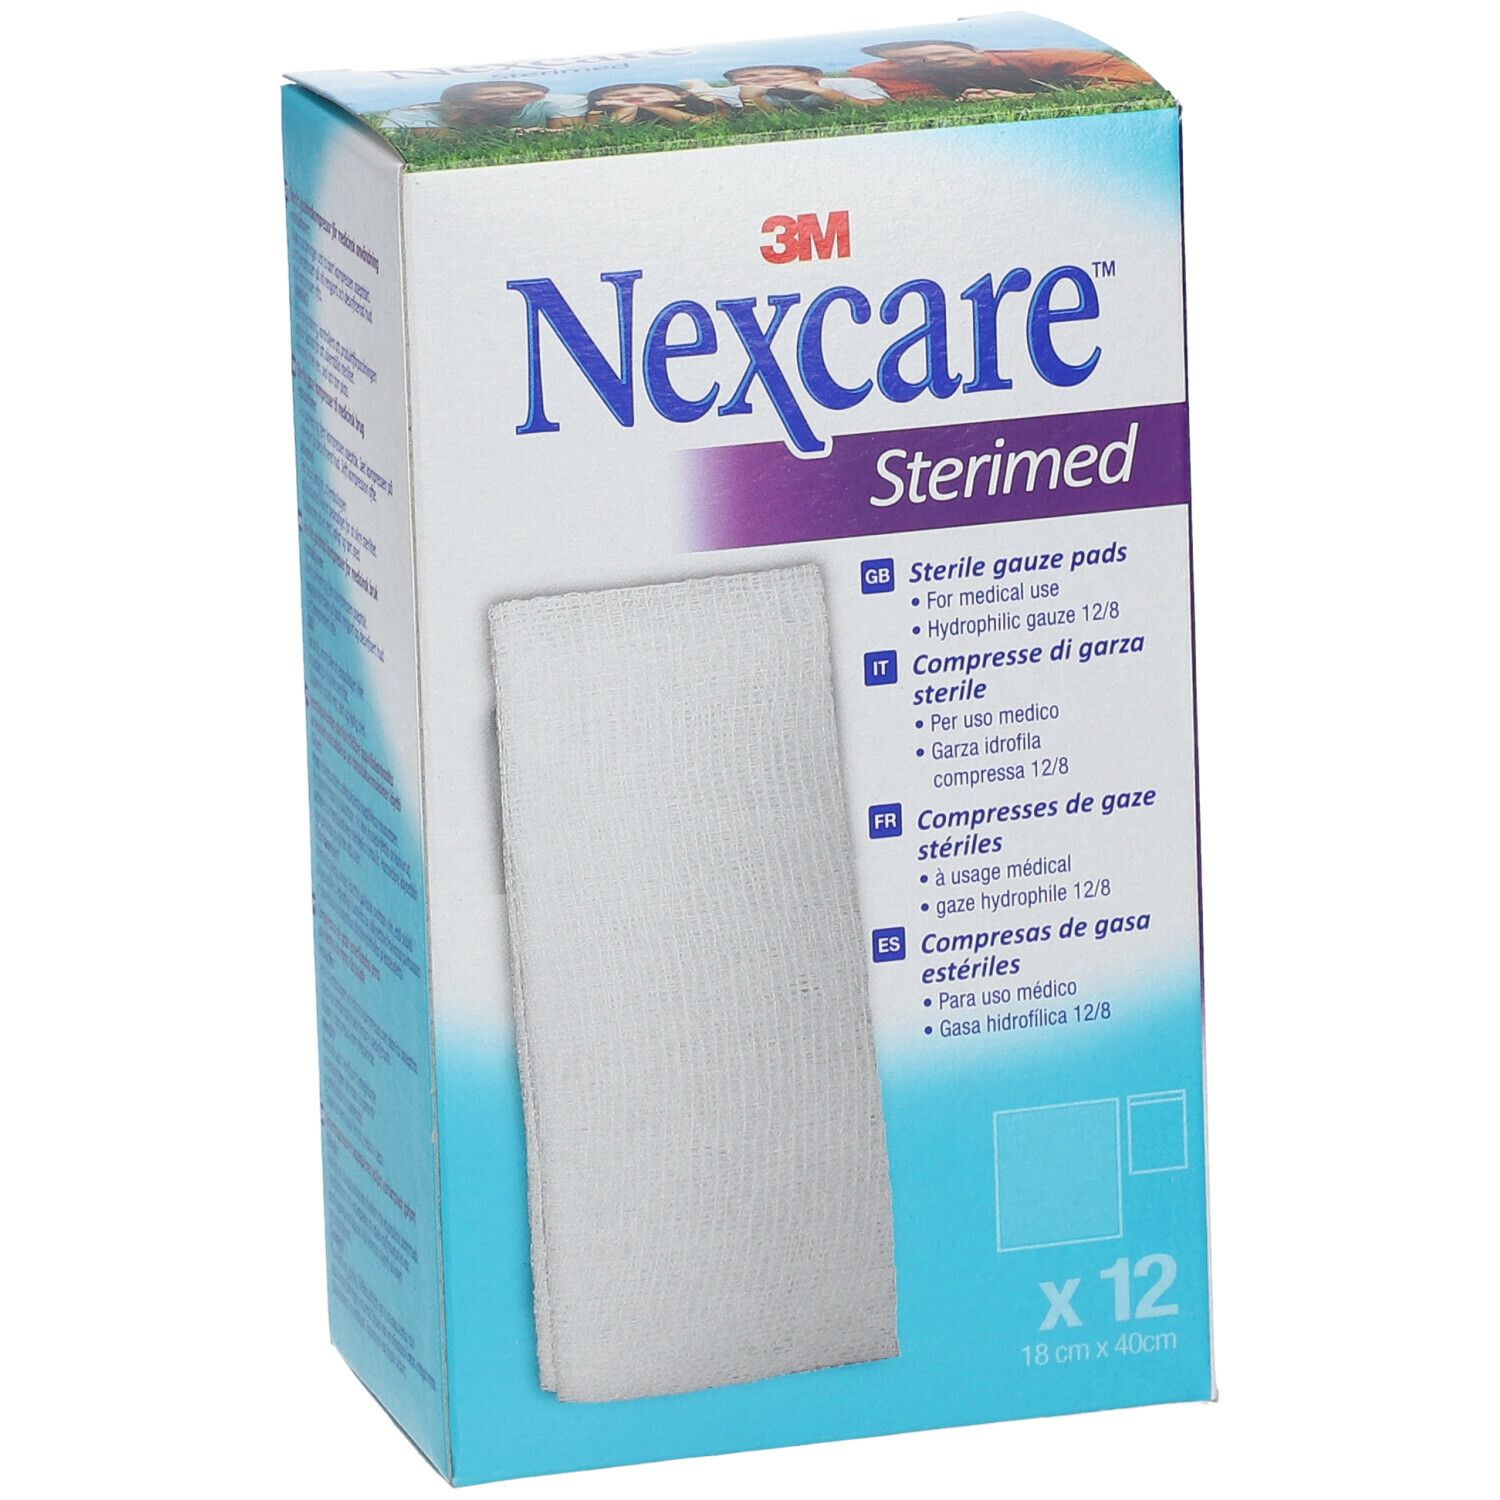 3M Nexcare™ Sterimed 18 x 40 cm